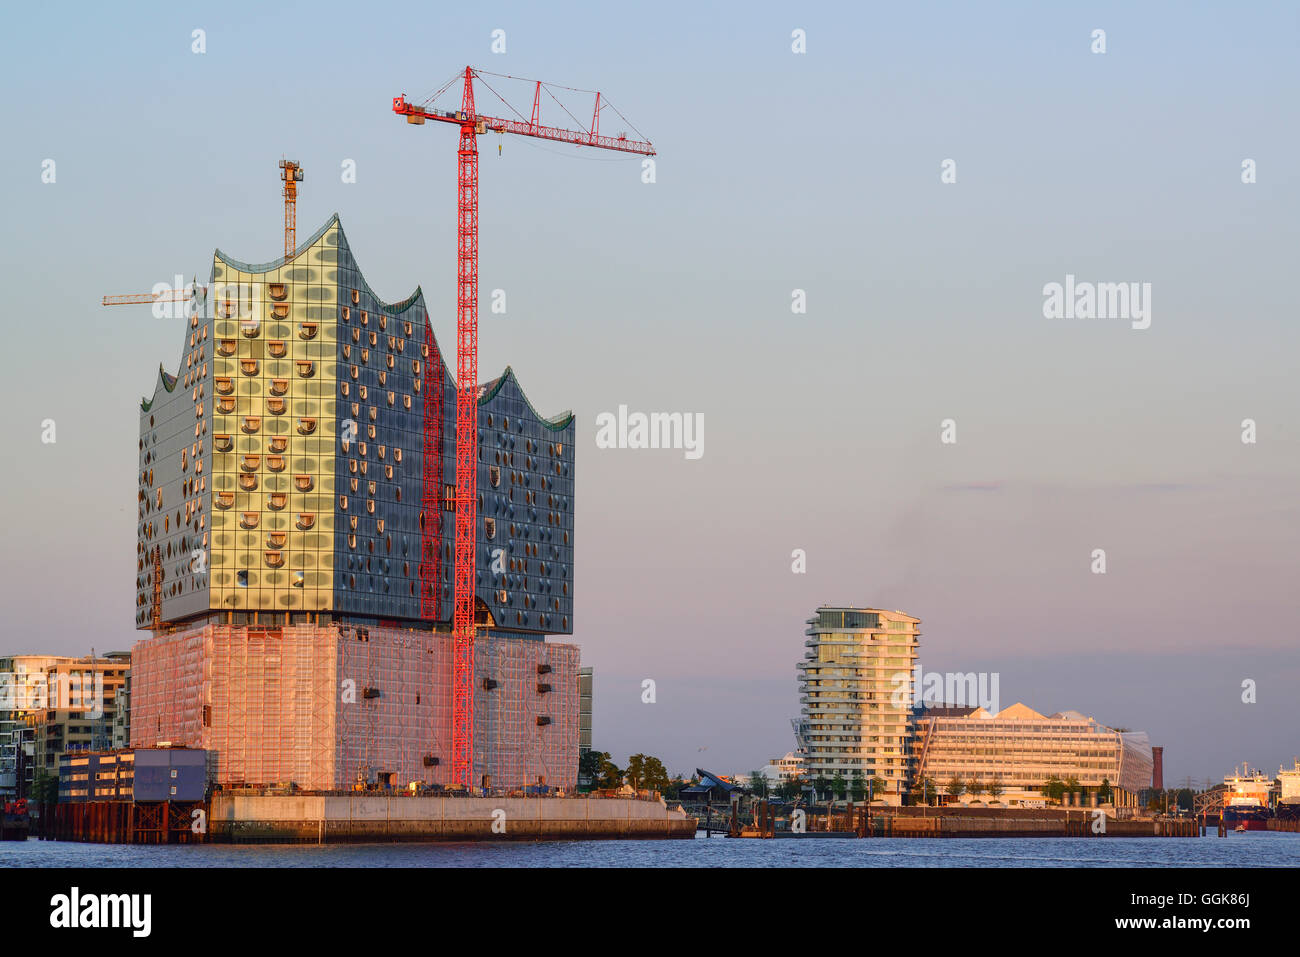 Elbphilharmonie and Marco Polo Tower, Hafencity, Hamburg, Germany Stock Photo